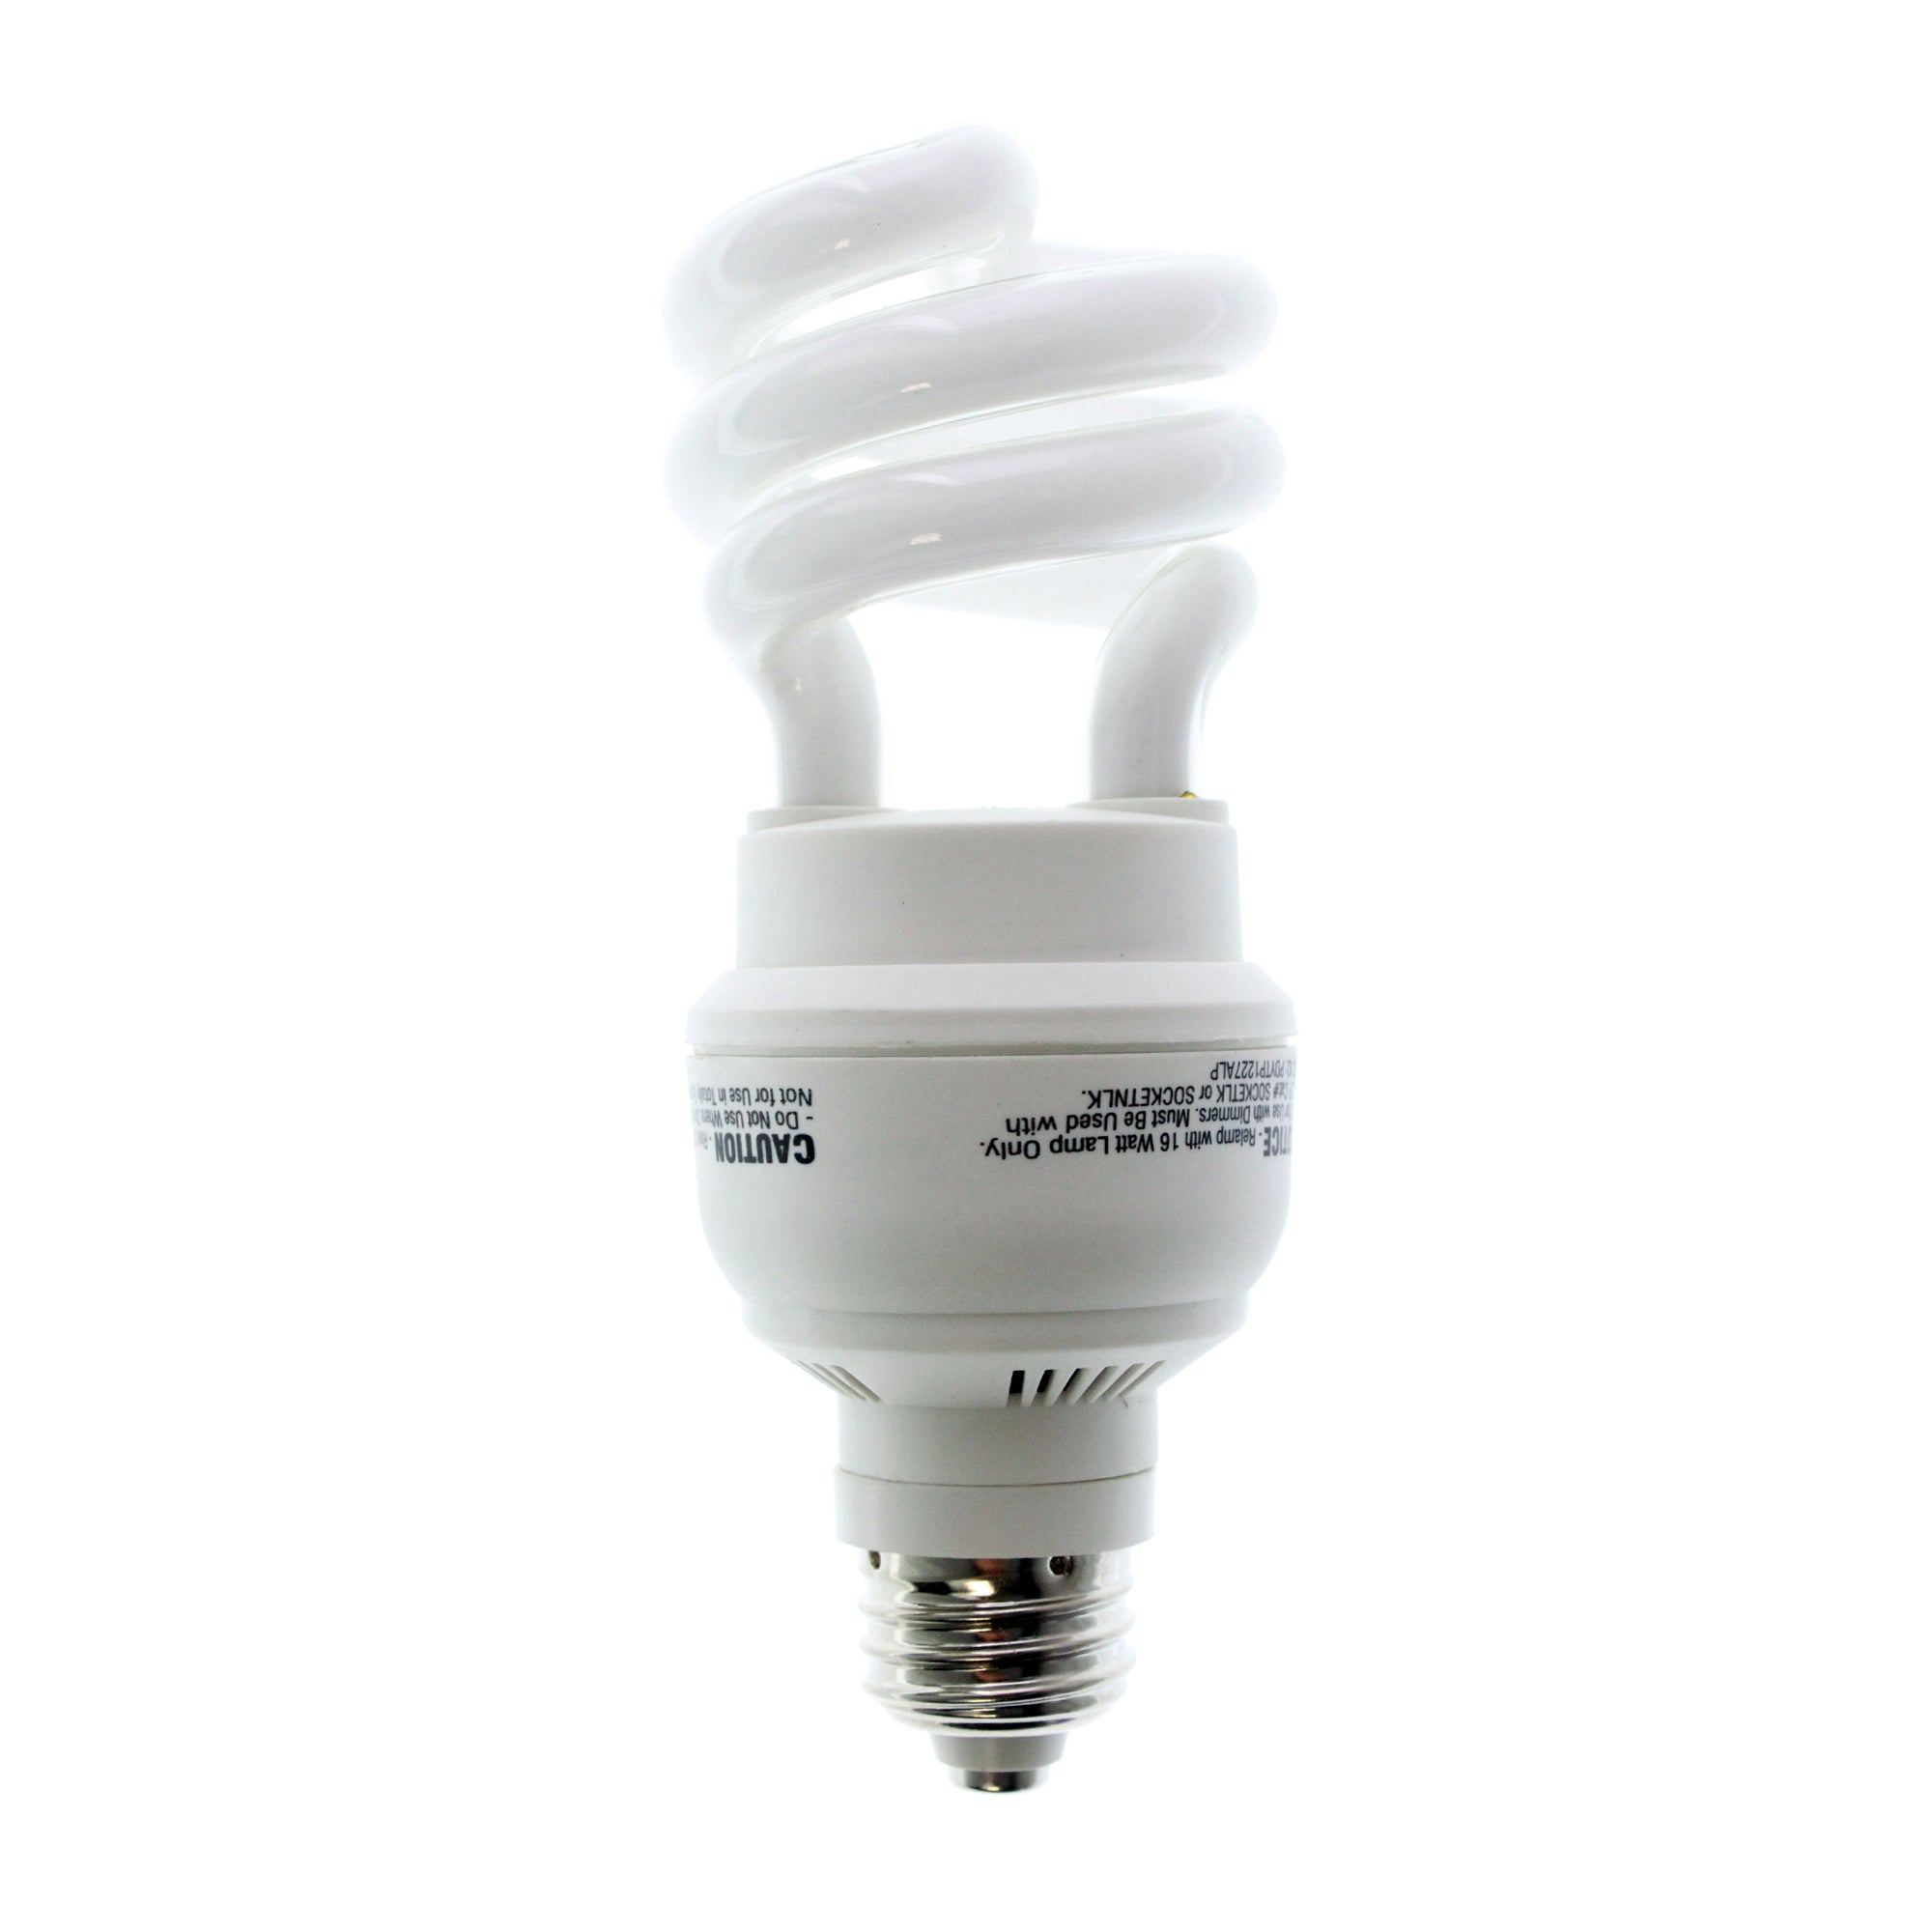 A.L.P. Lighting Components, ALP LIGHTING AET2P16 COMPACT FLOURESCENT CFL LAMP, E26 MED BASE, 3K, 16-WATT